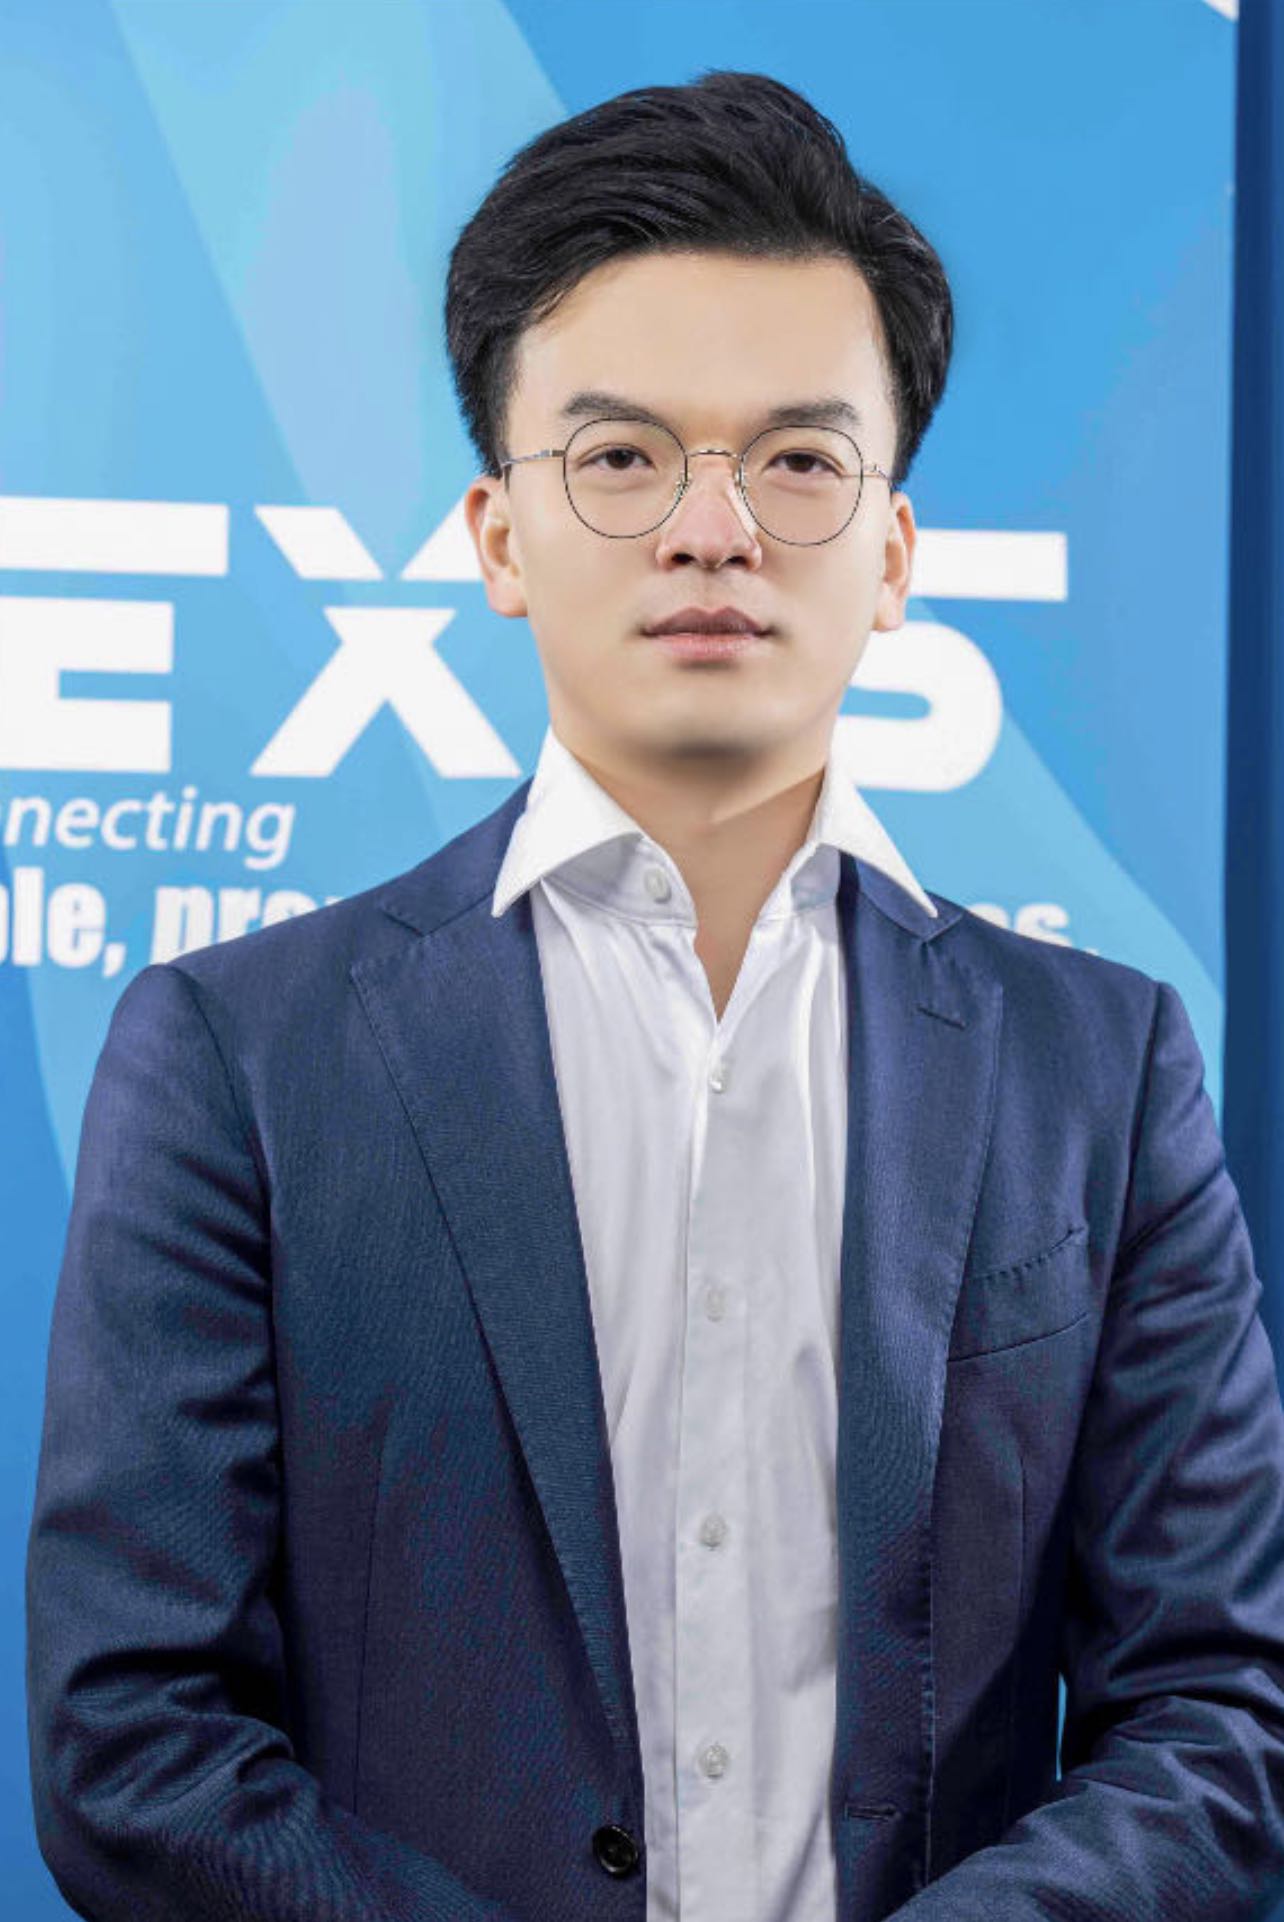 XianfengMartin Liu Real Estate Agent